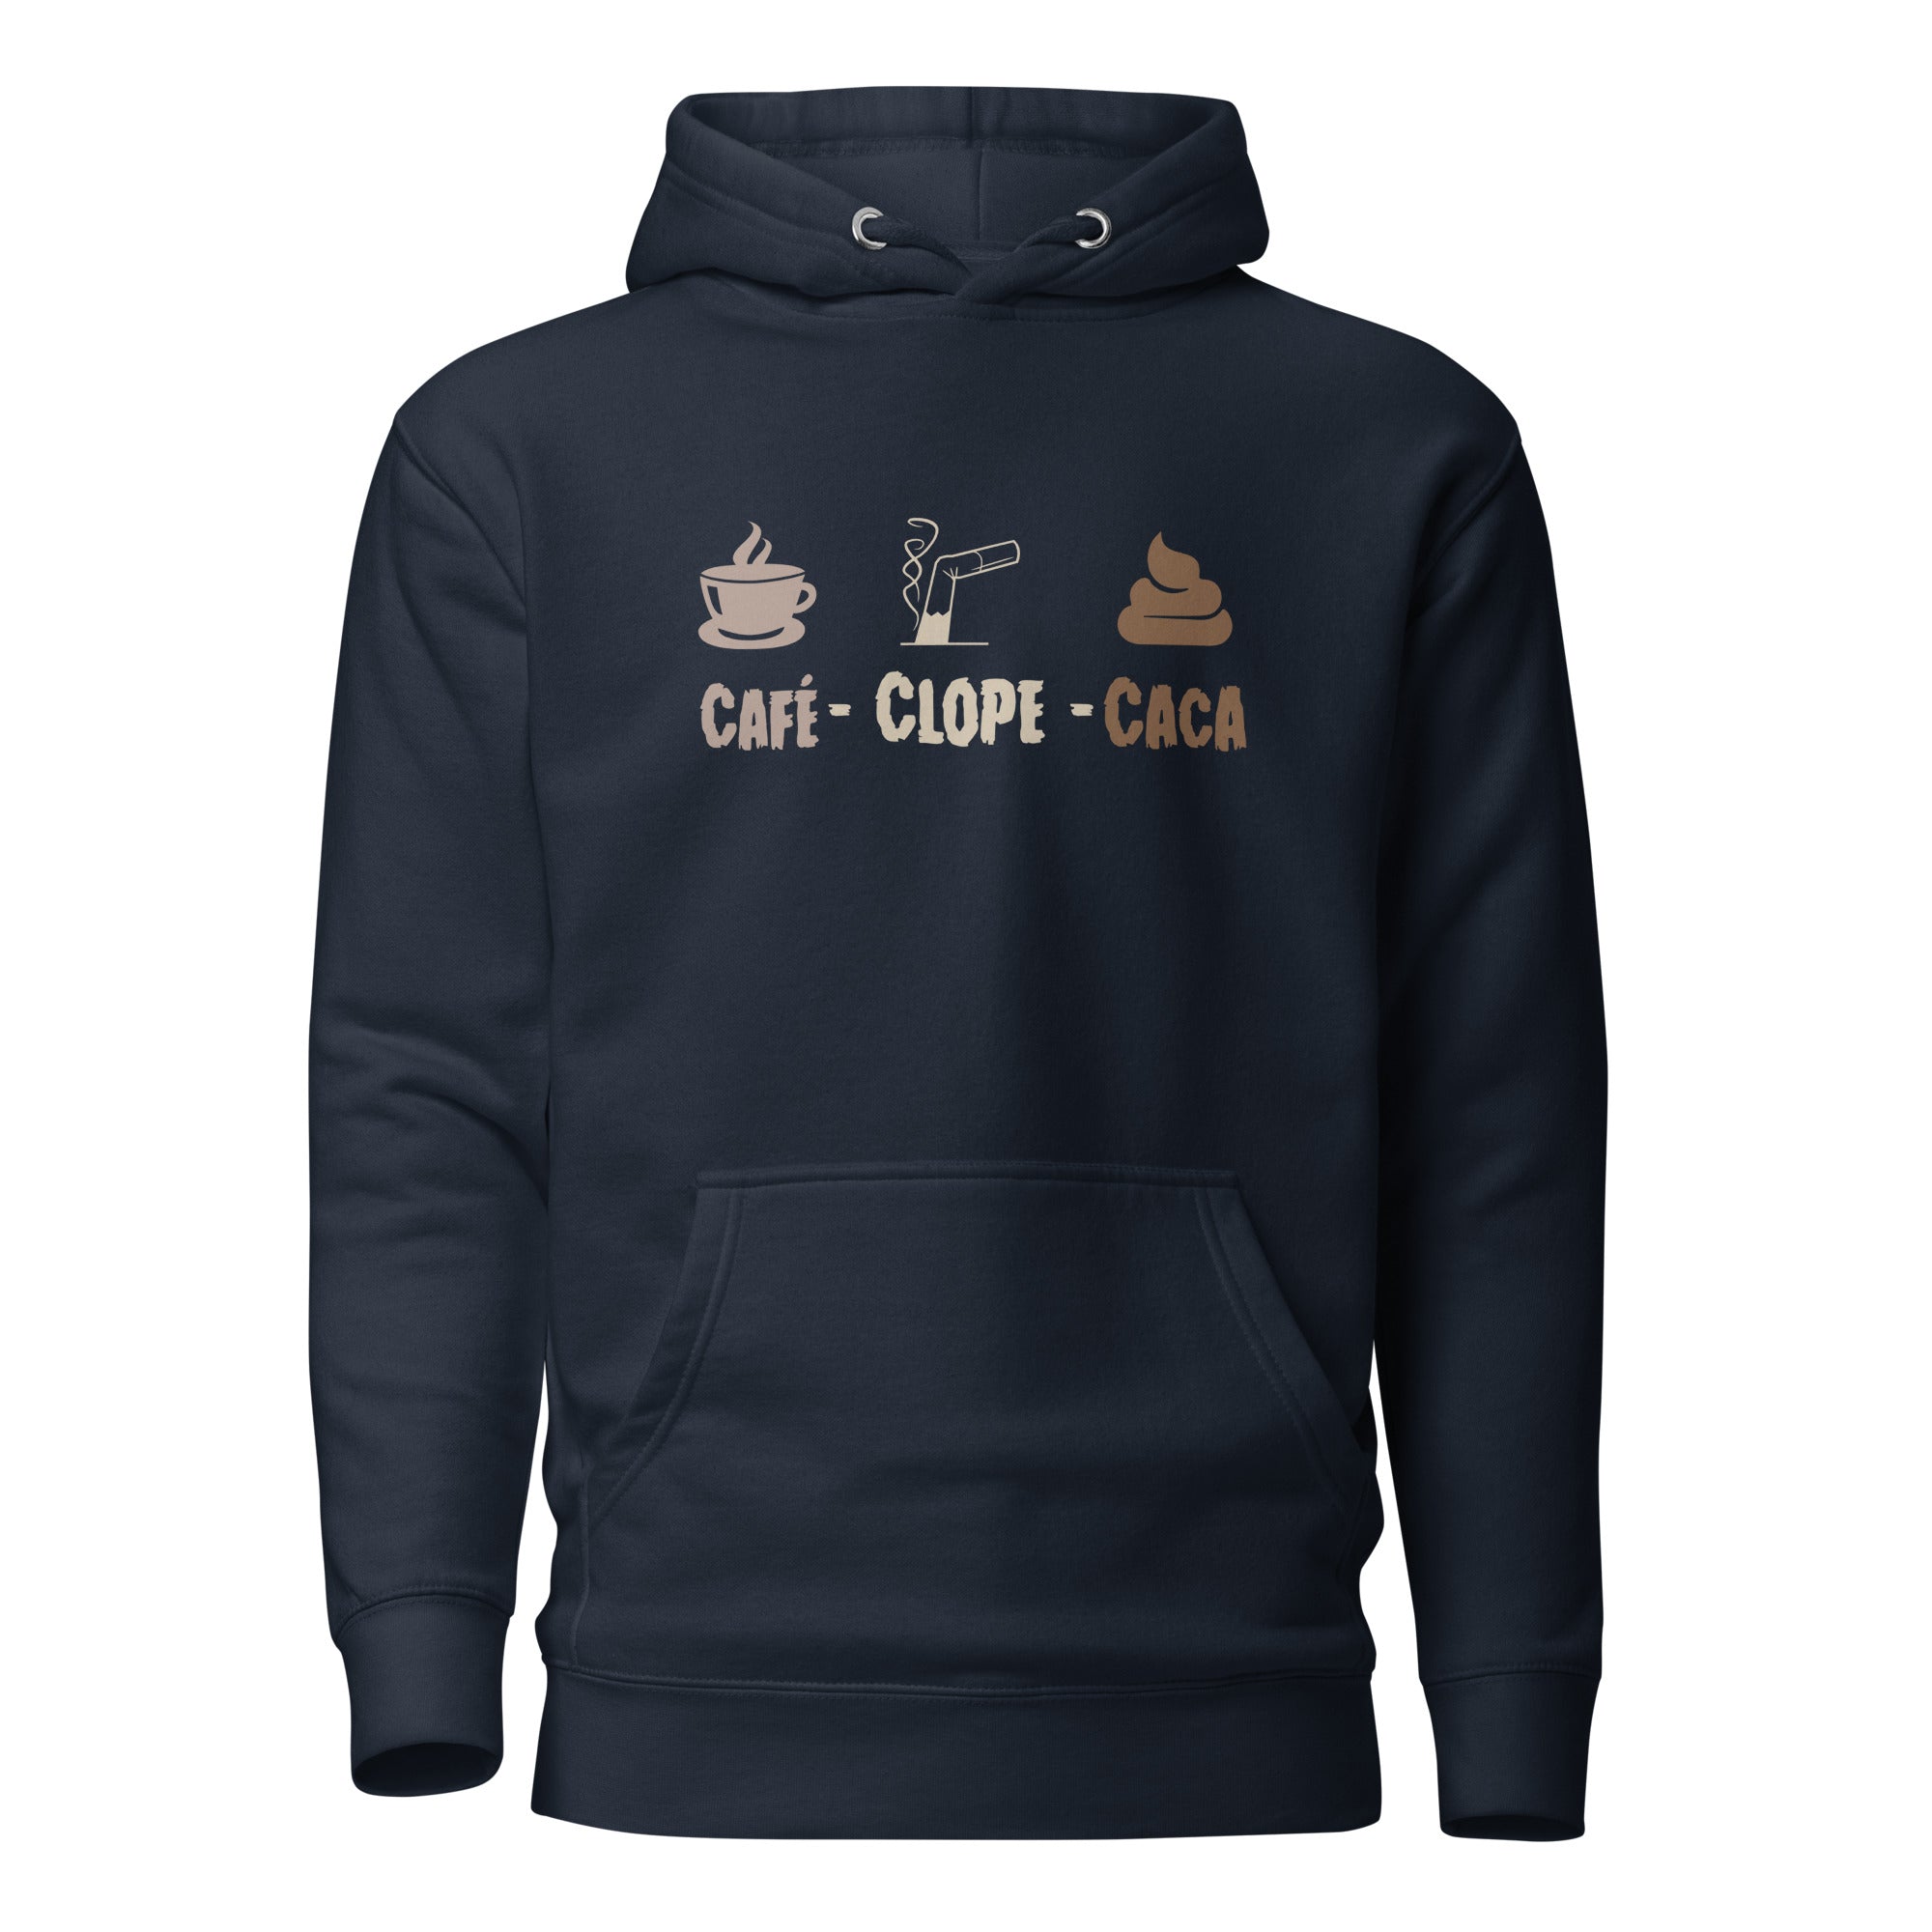 Café-clope-caca - Sweat à Capuche Unisexe